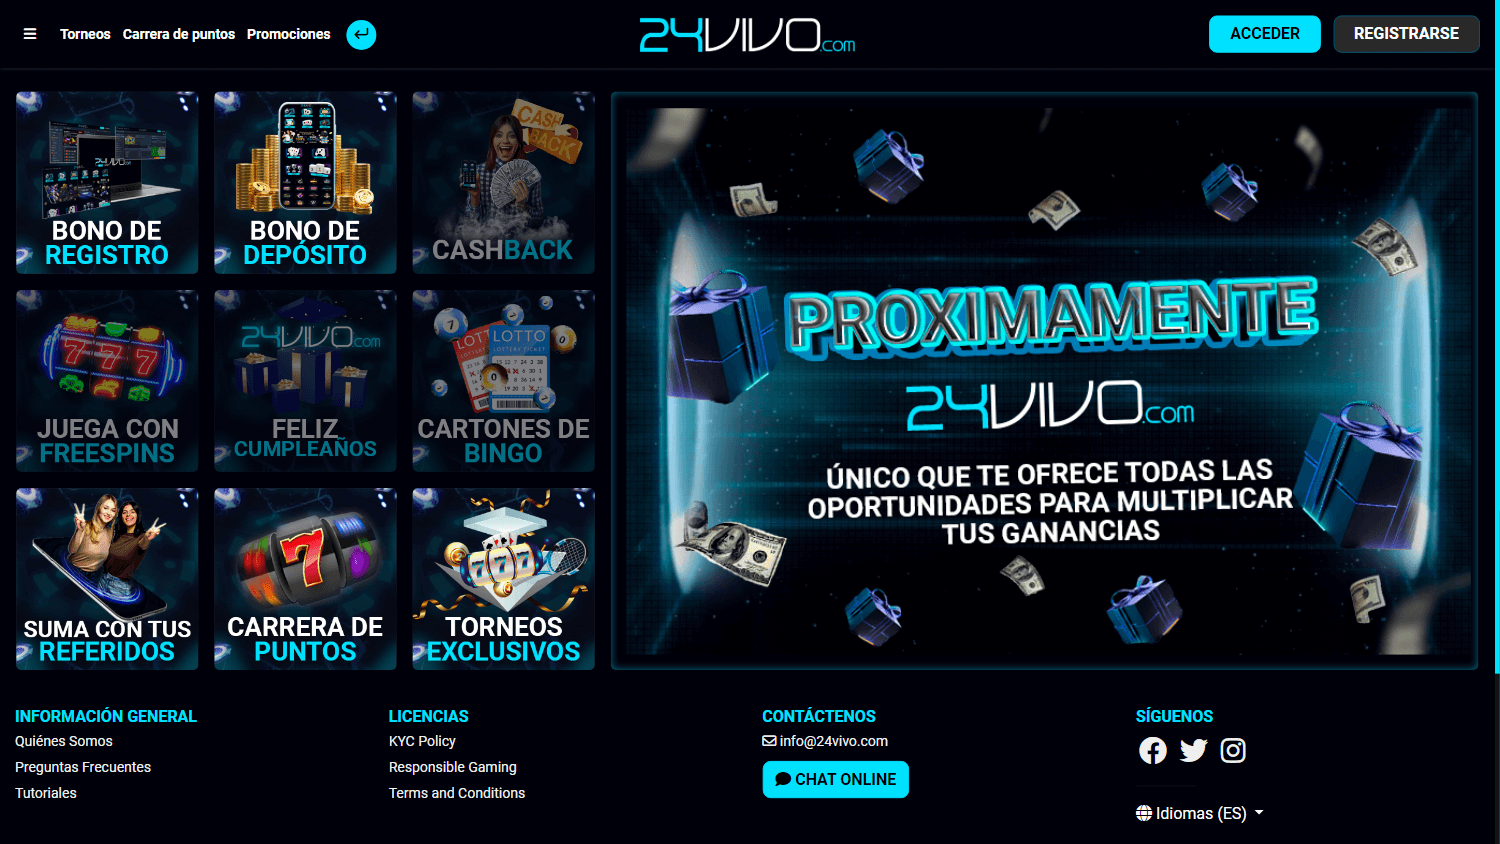 24vivo_casino_promotions_desktop